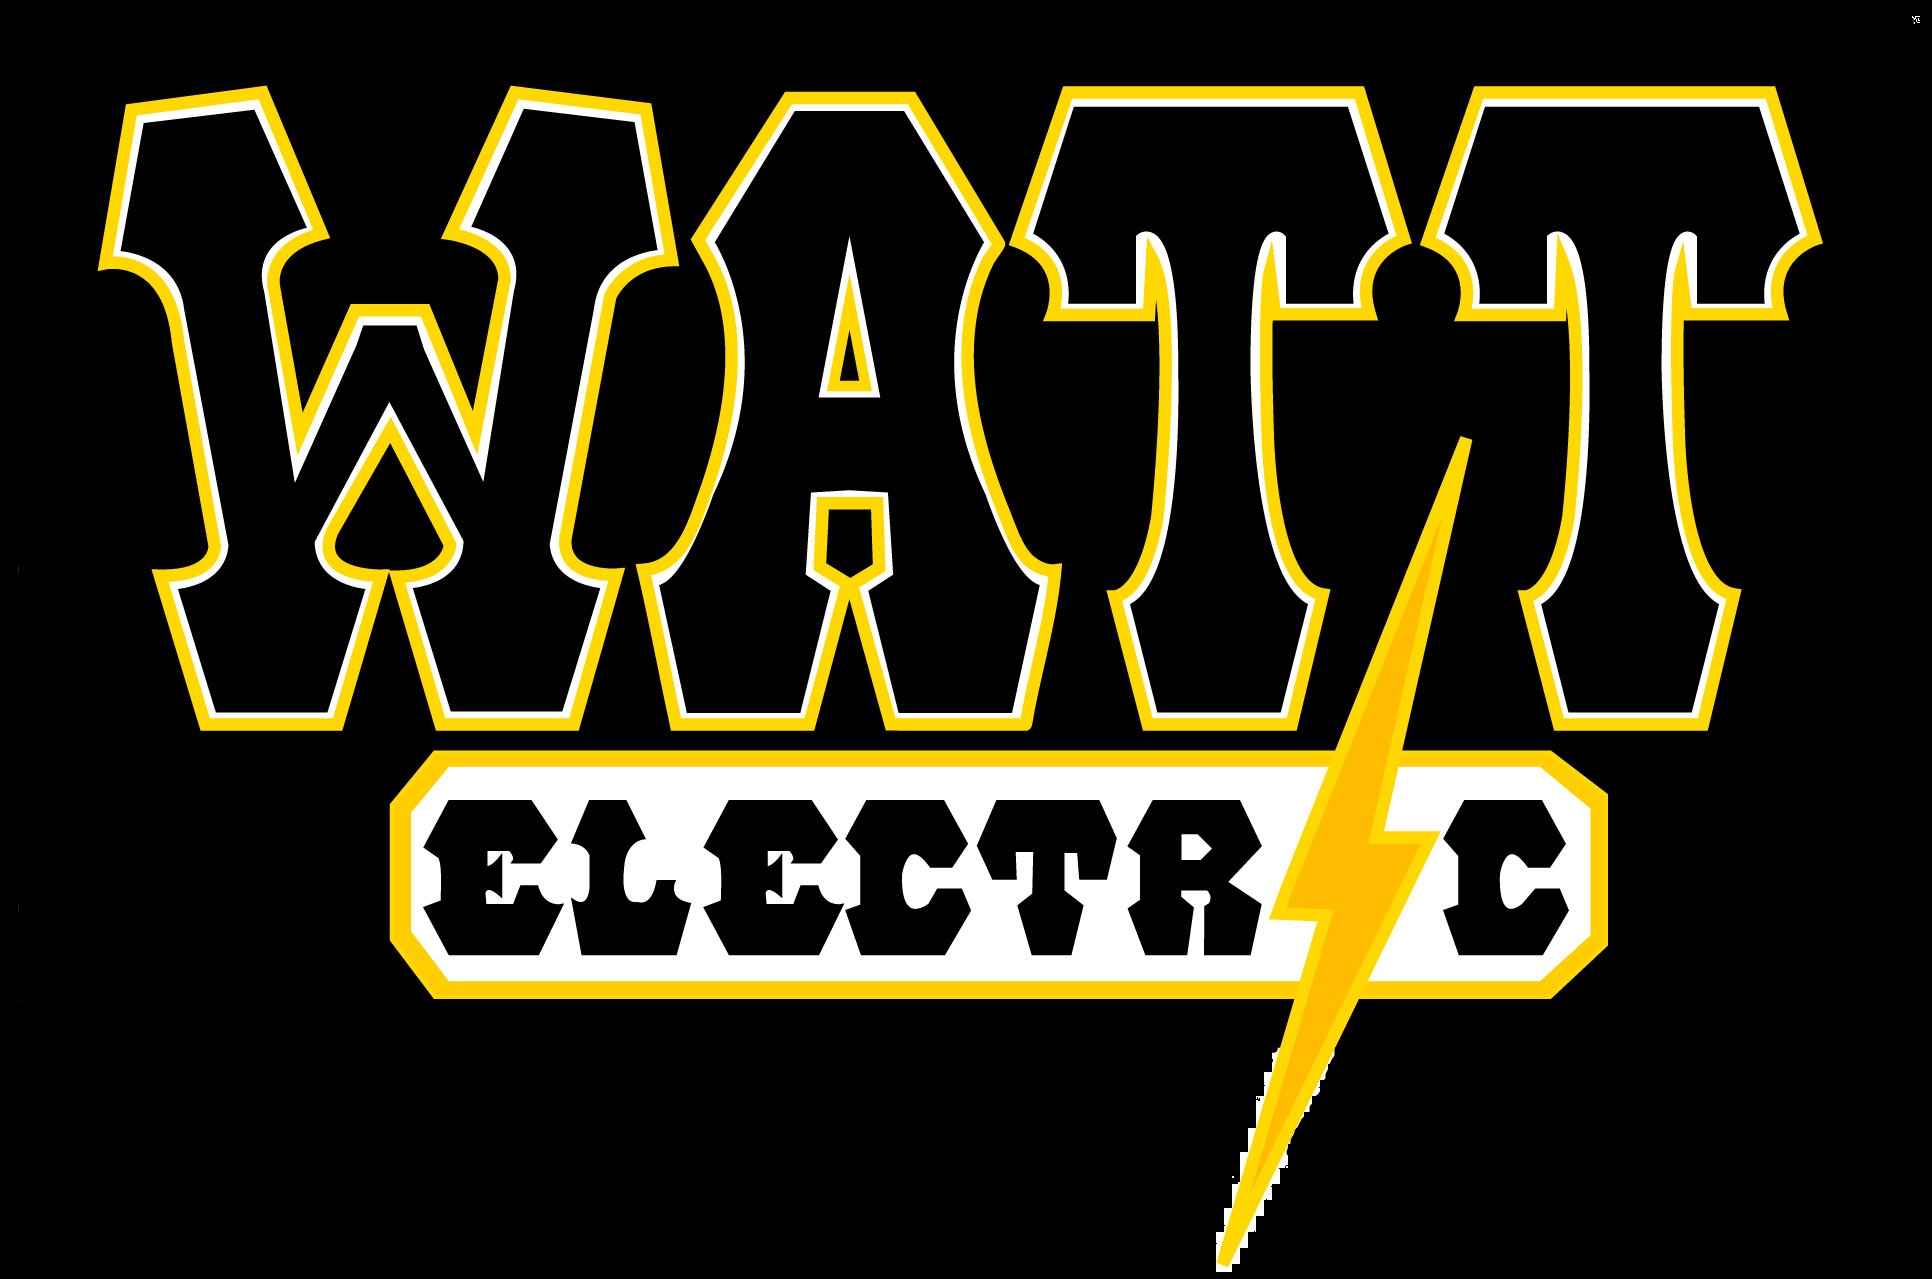 Watt Electric Inc.